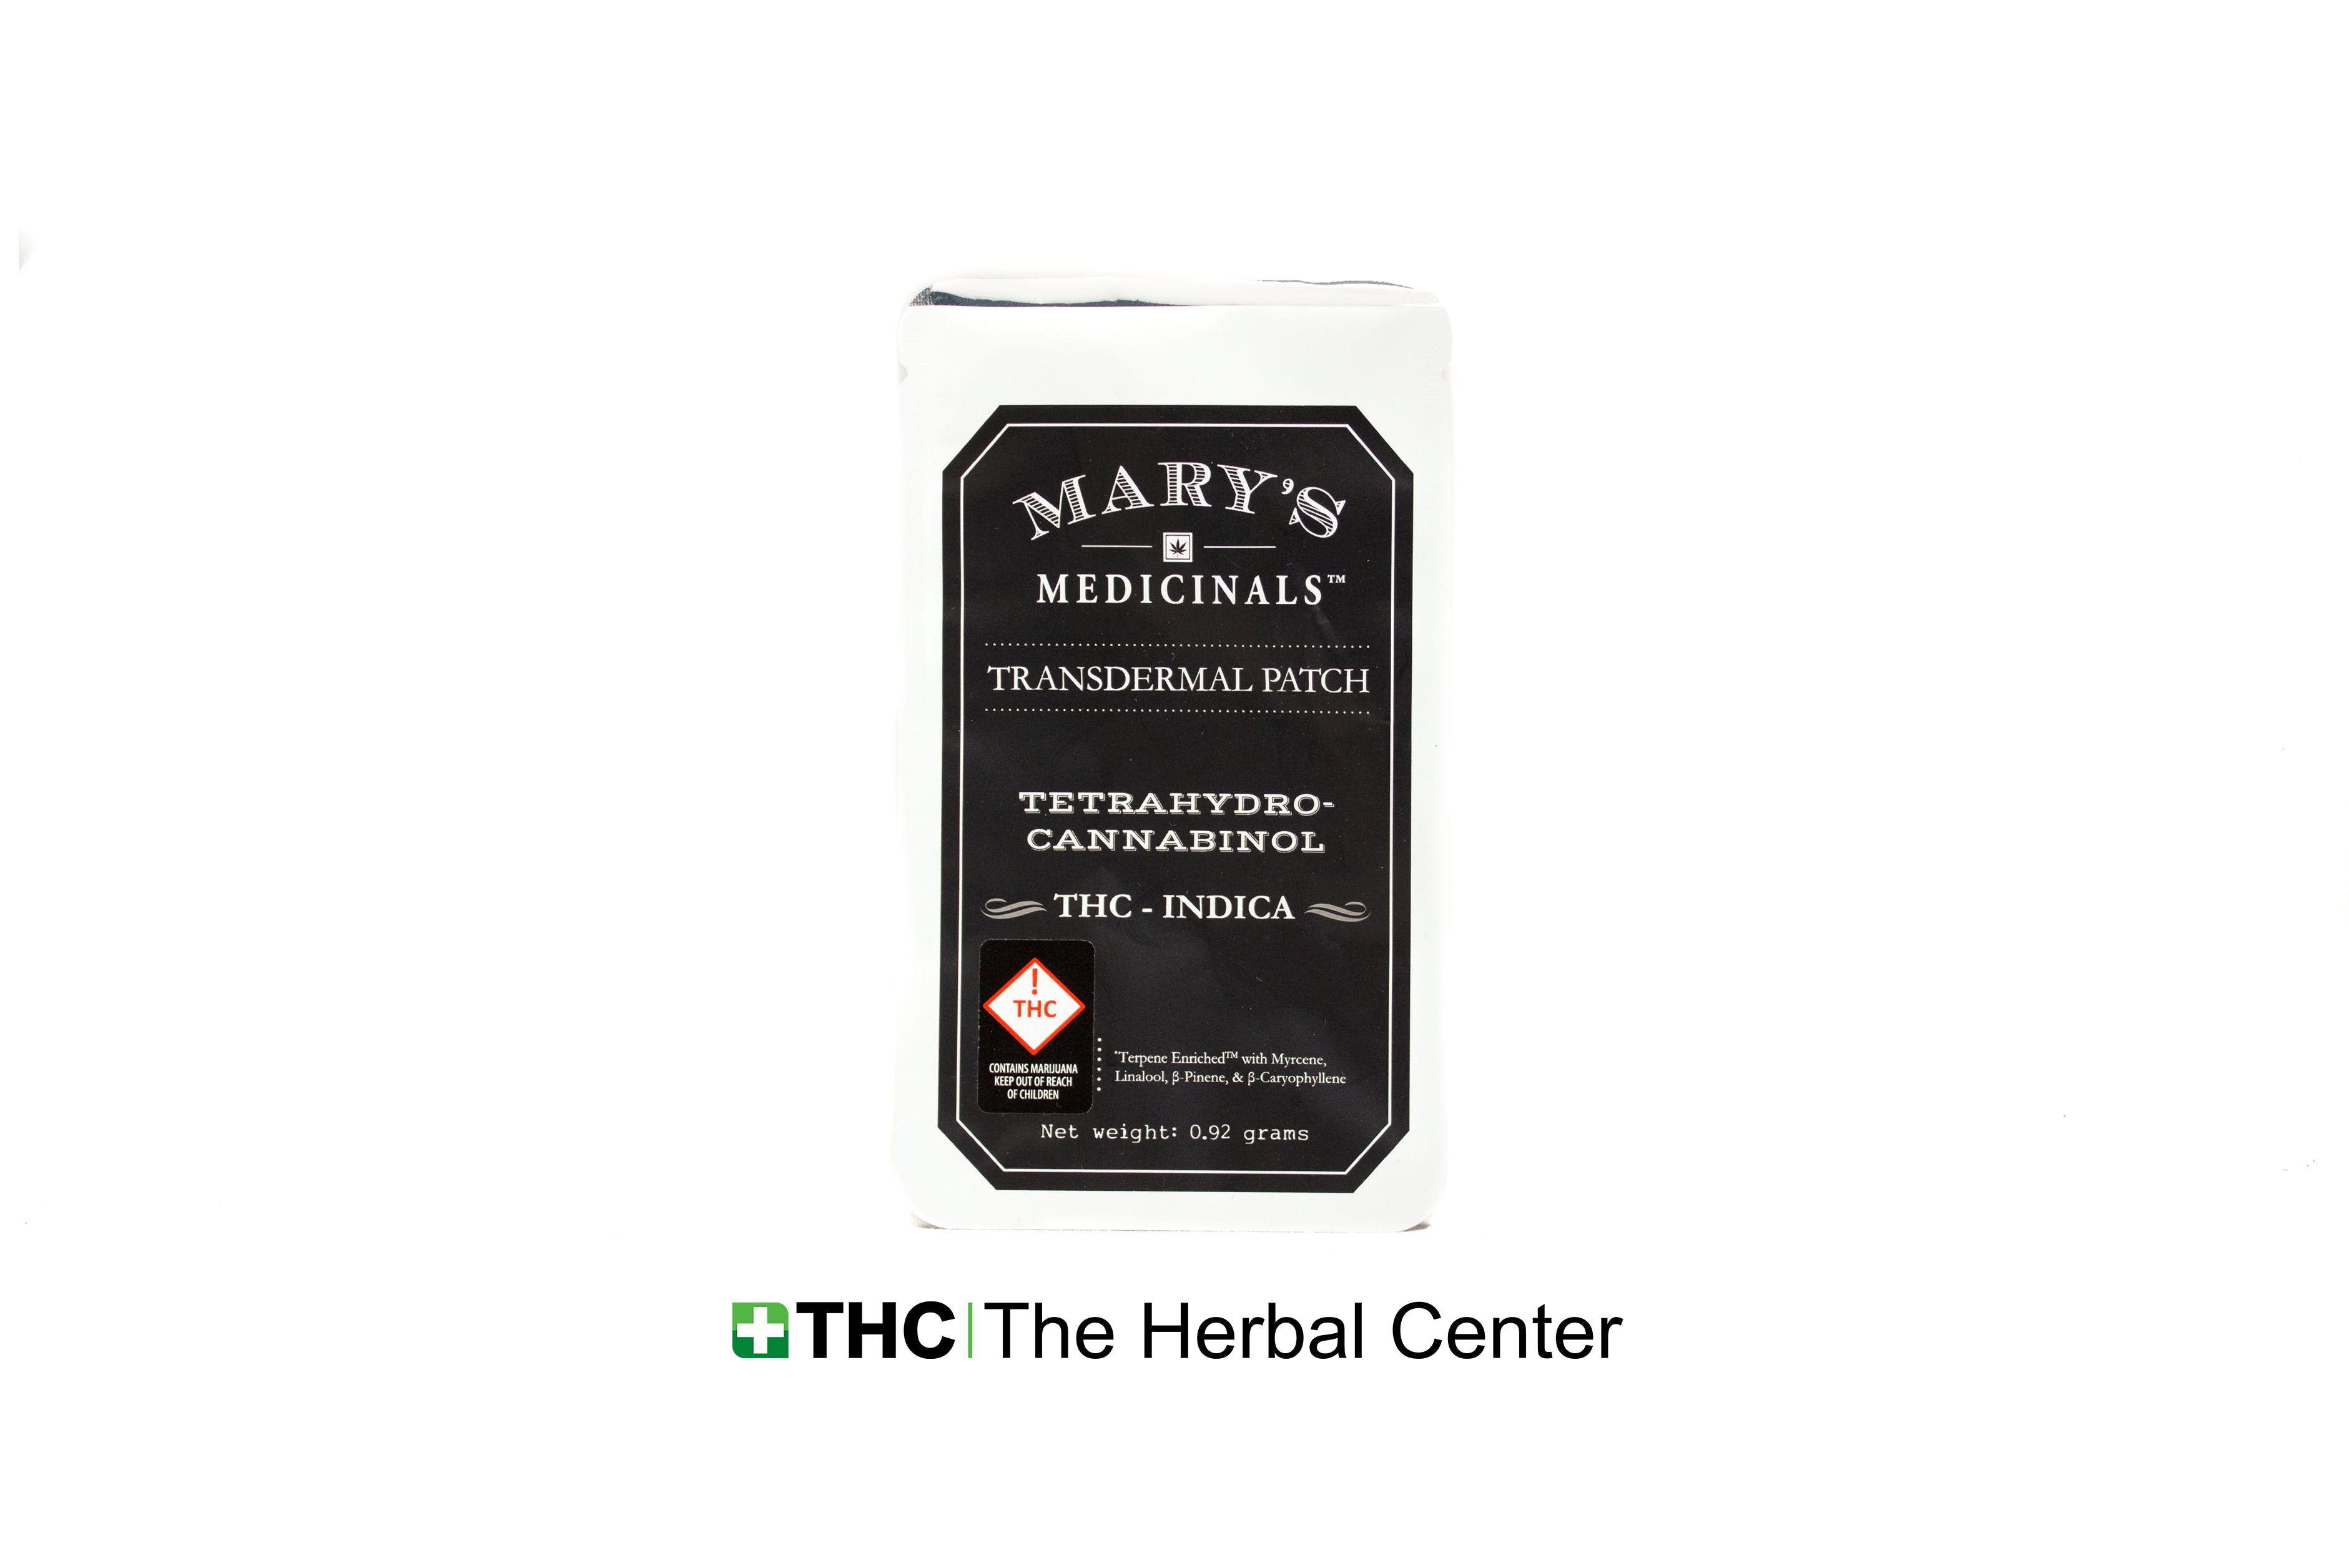 topicals-marys-medicinals-transdermal-patch-a-c2-80-c2-93-thc-indica